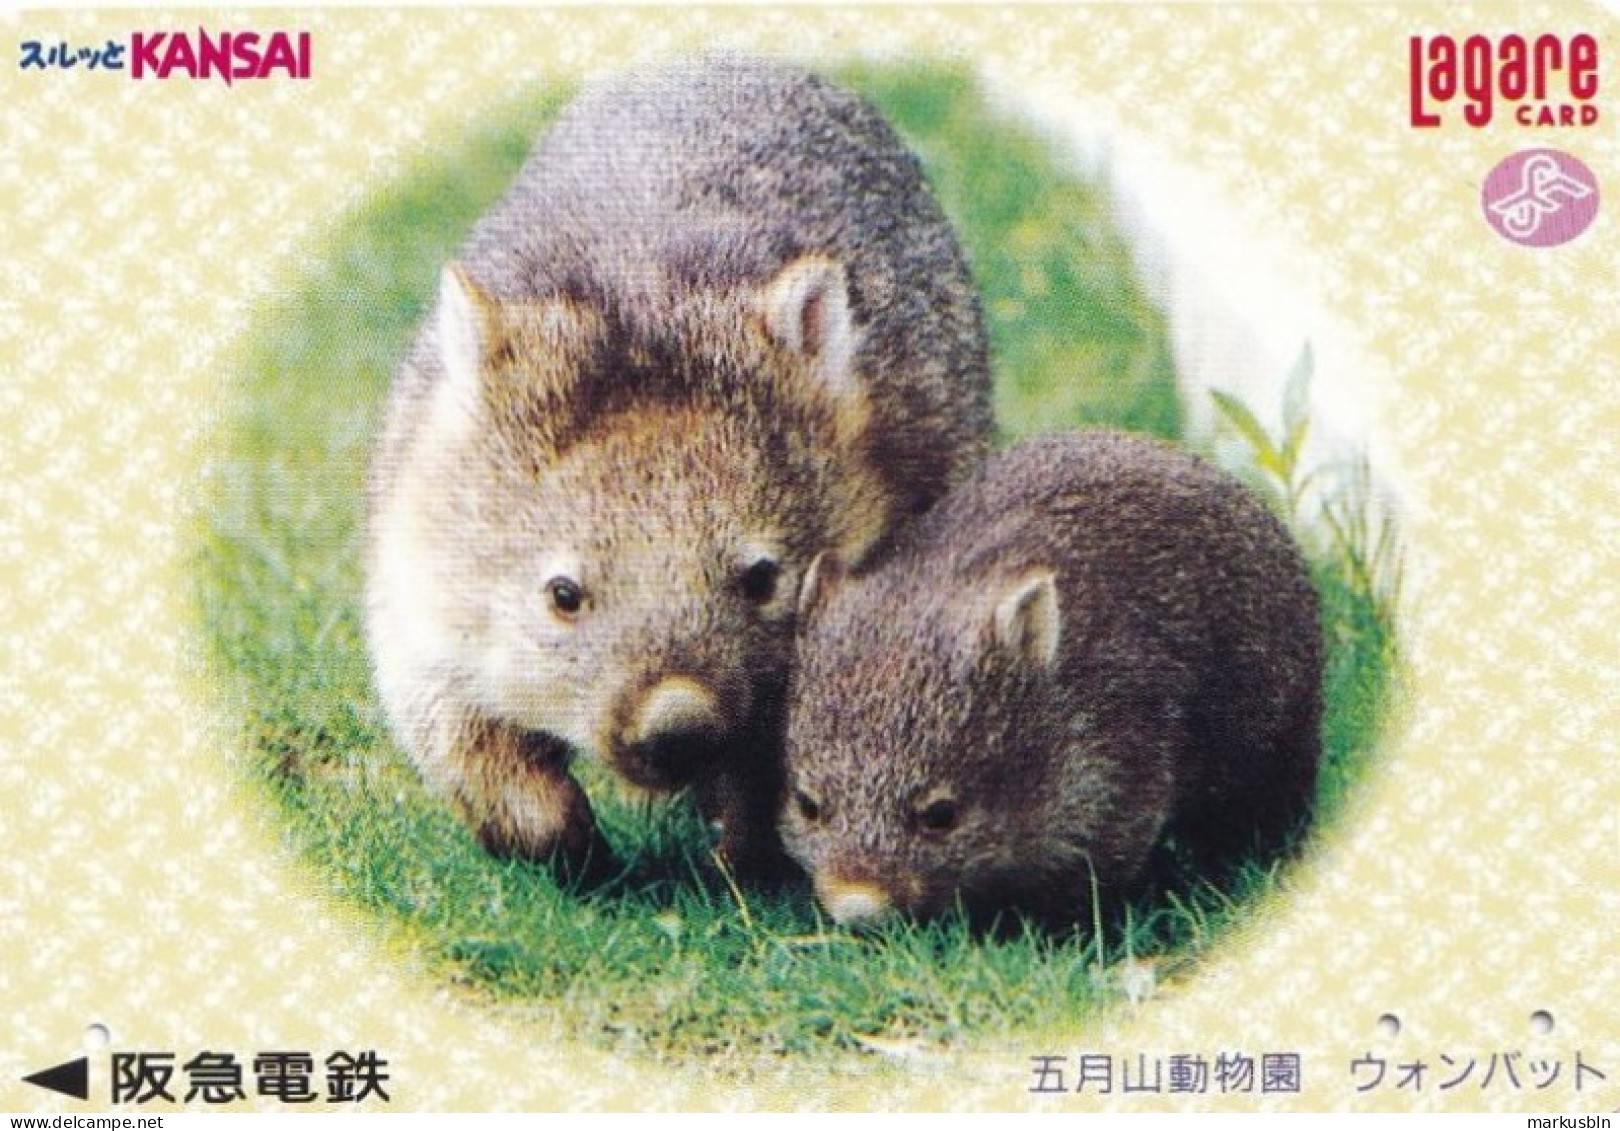 Japan Prepaid Lagare Card 5000 - Kansai Animals Wombat - Japan